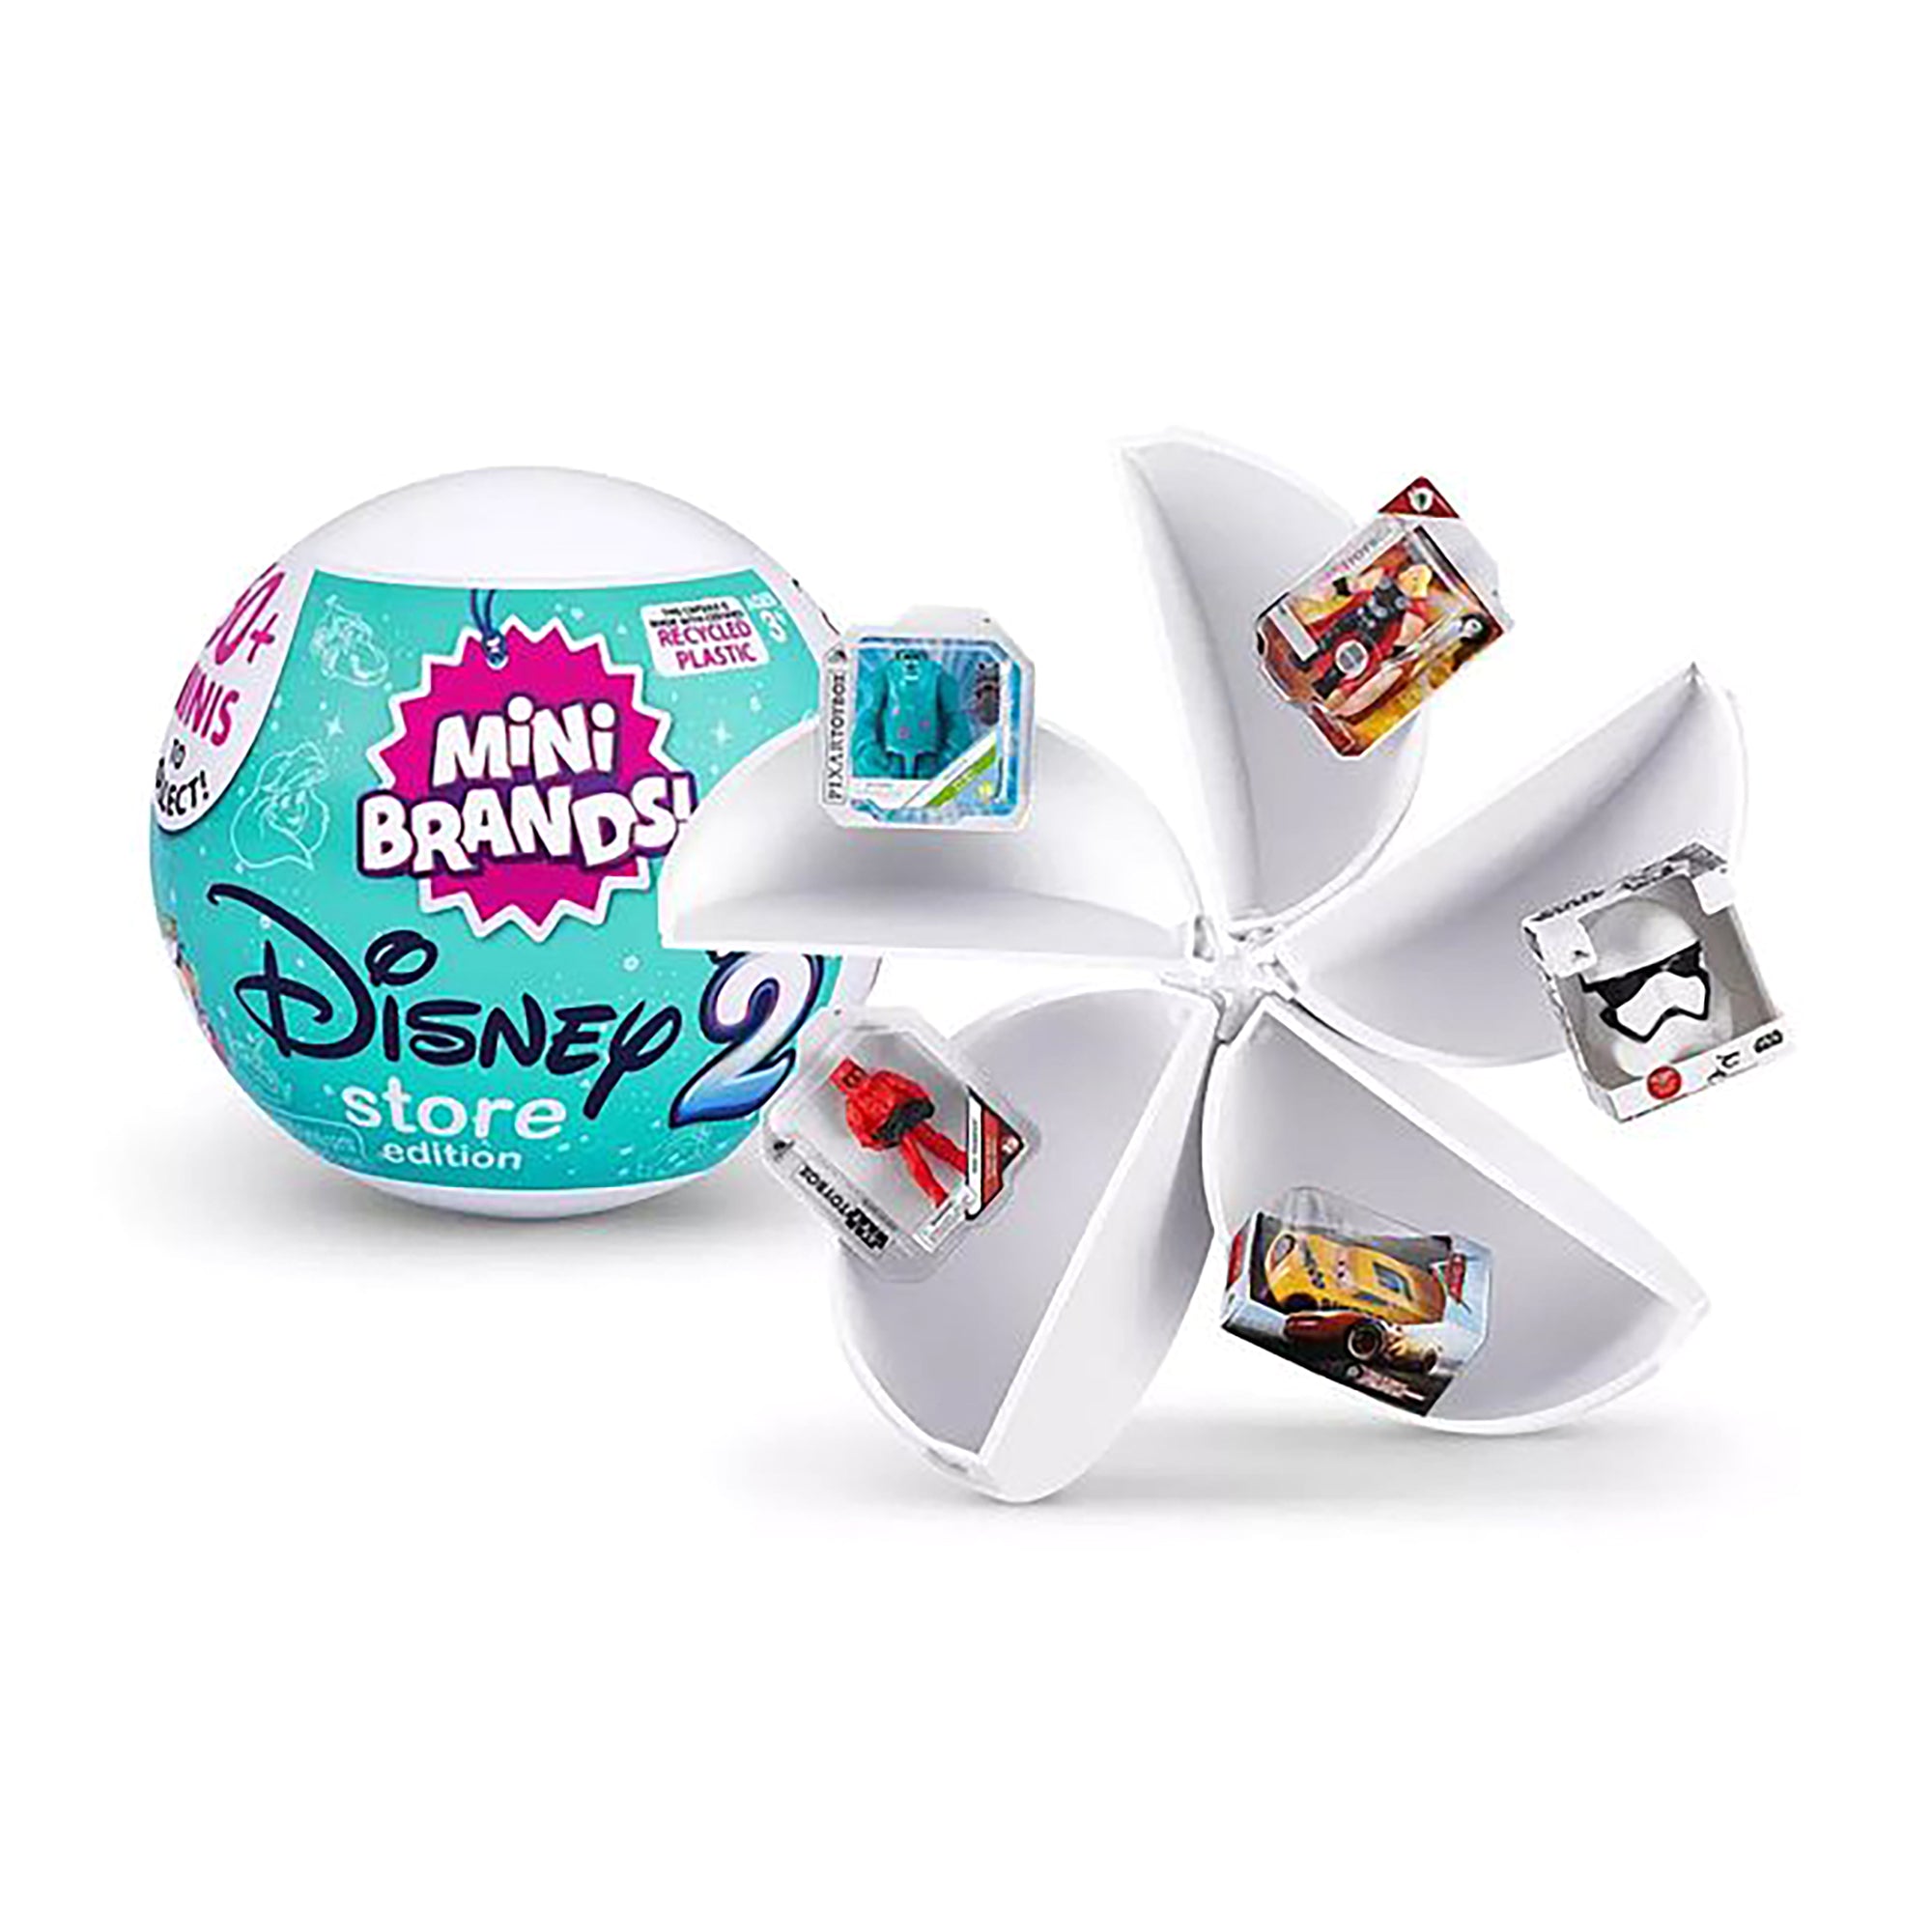 5 Surprise Disney Store Mini Brands Series 2 – Toys R Us Australia